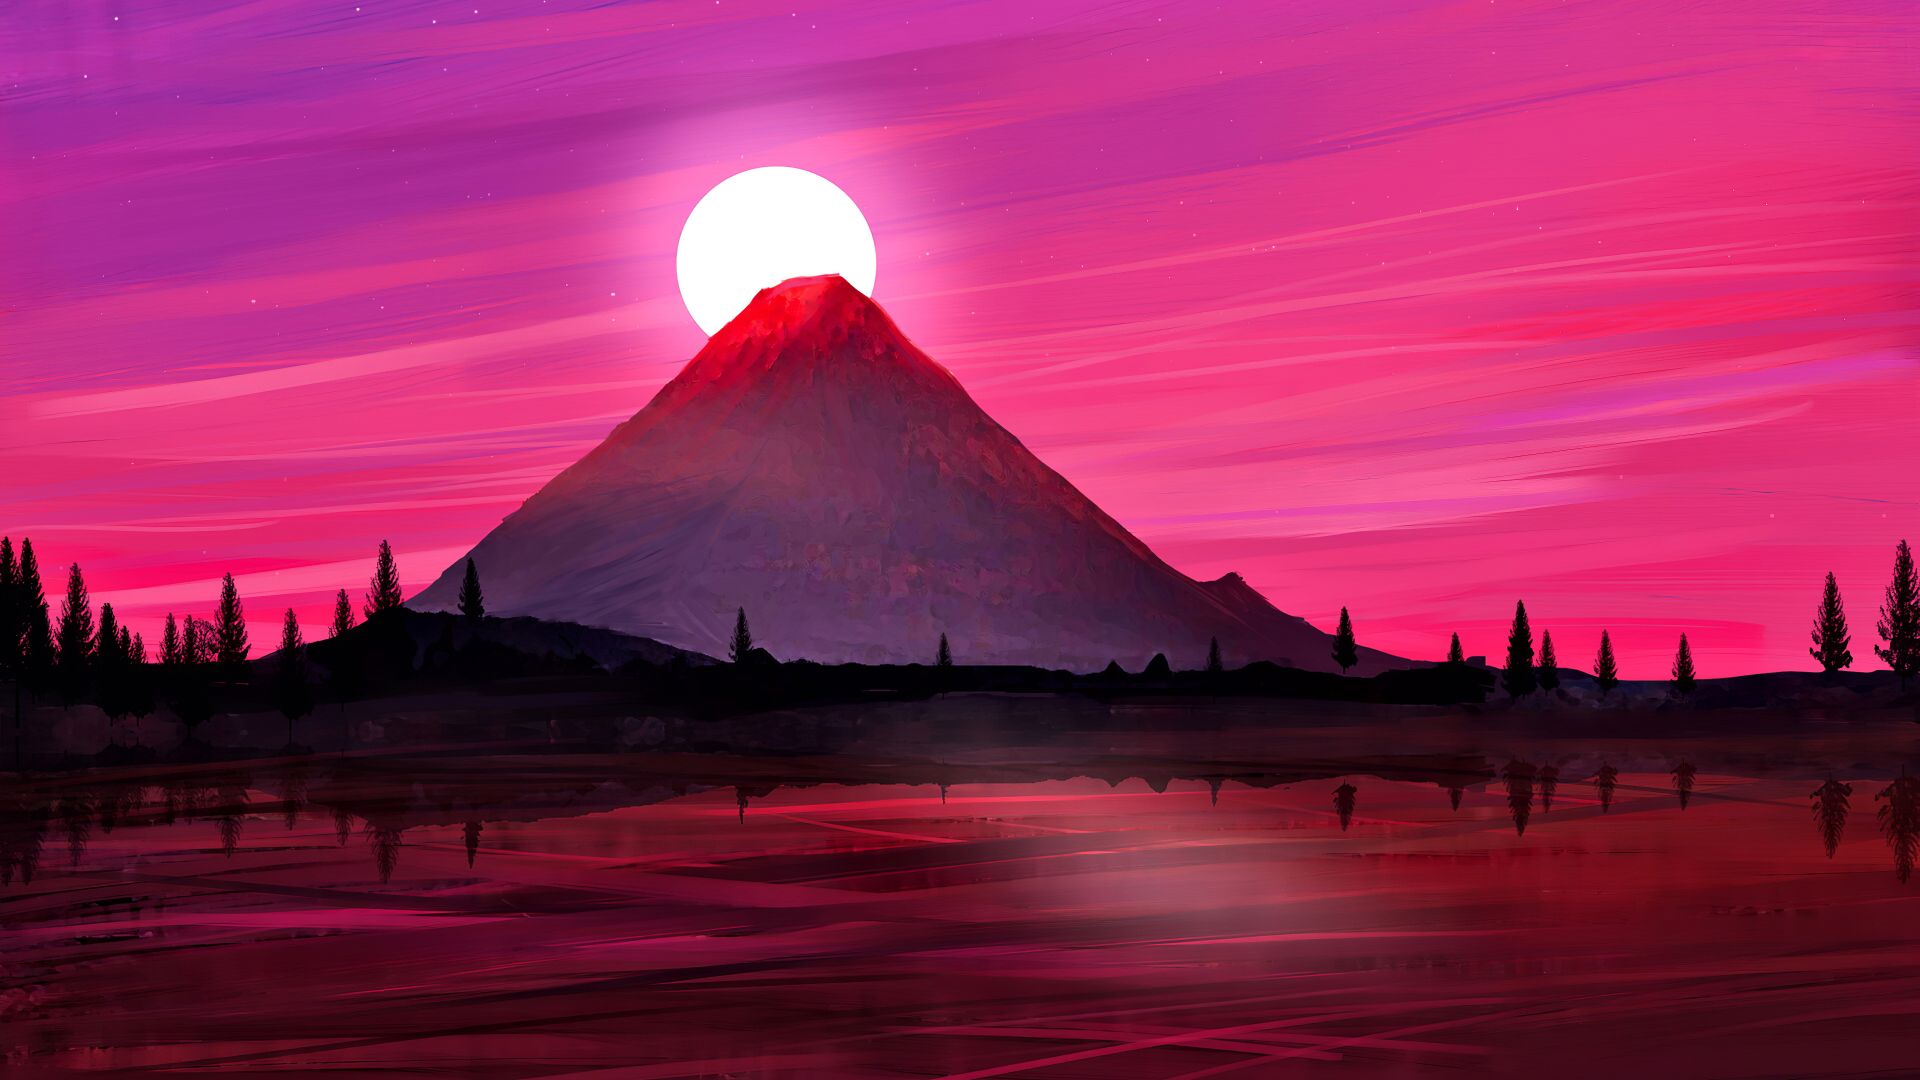 Japan mountain, silhouette, minimal, art wallpaper, HD image, picture, background, b7fd92